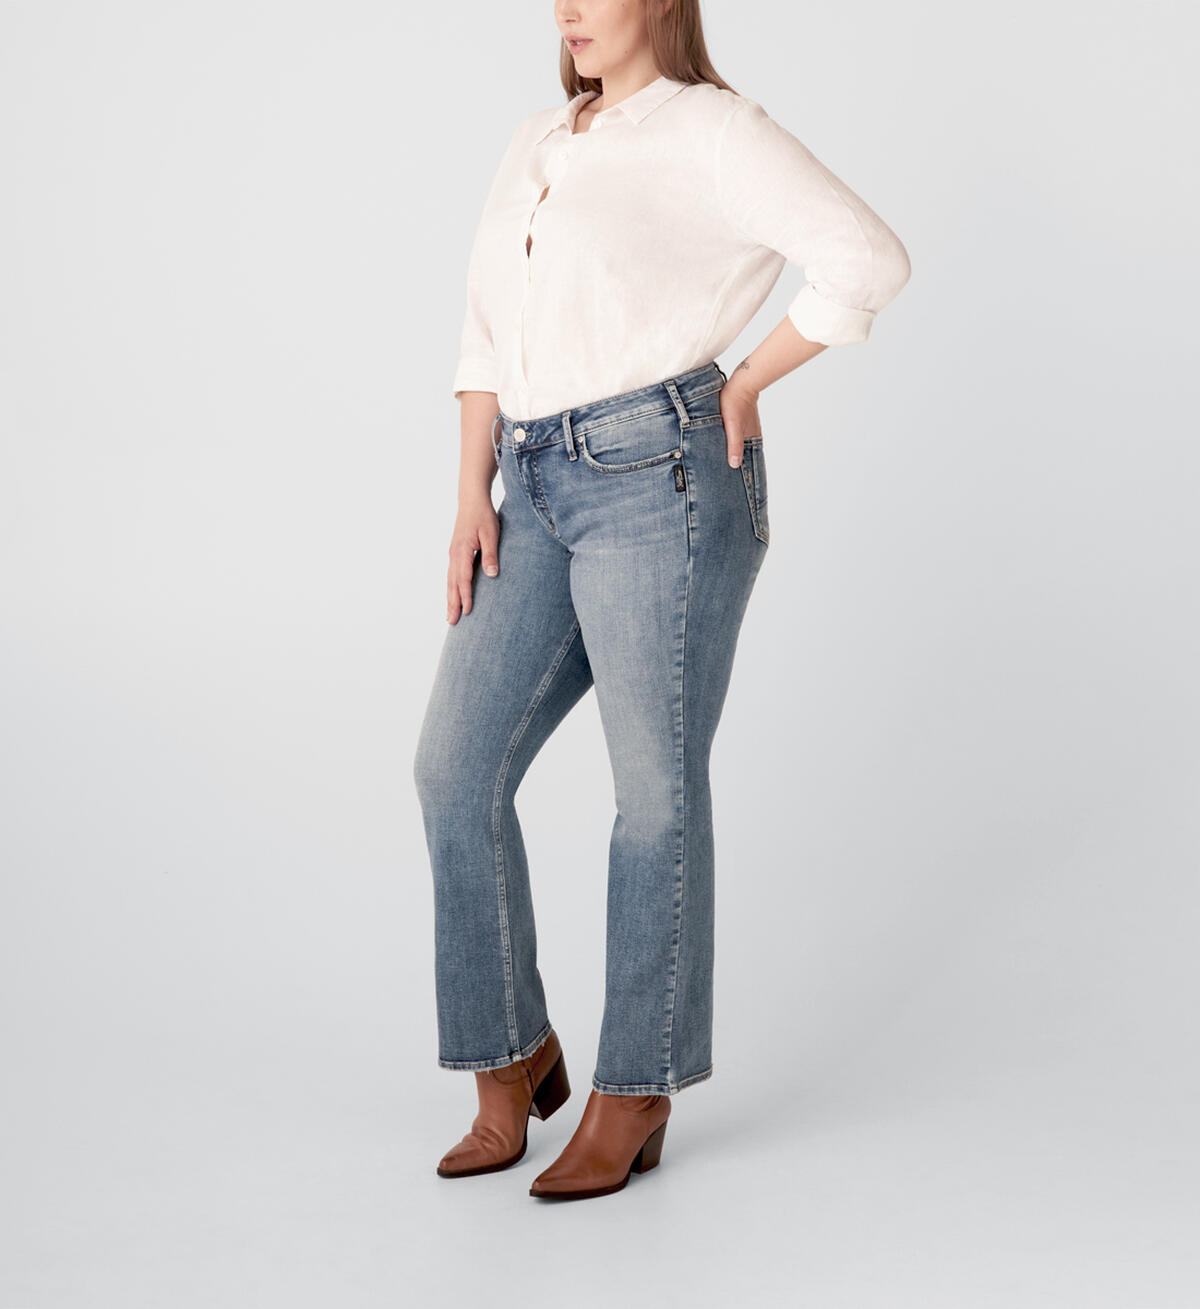 Elyse Mid Rise Slim Bootcut Jeans Plus Size, , hi-res image number 2